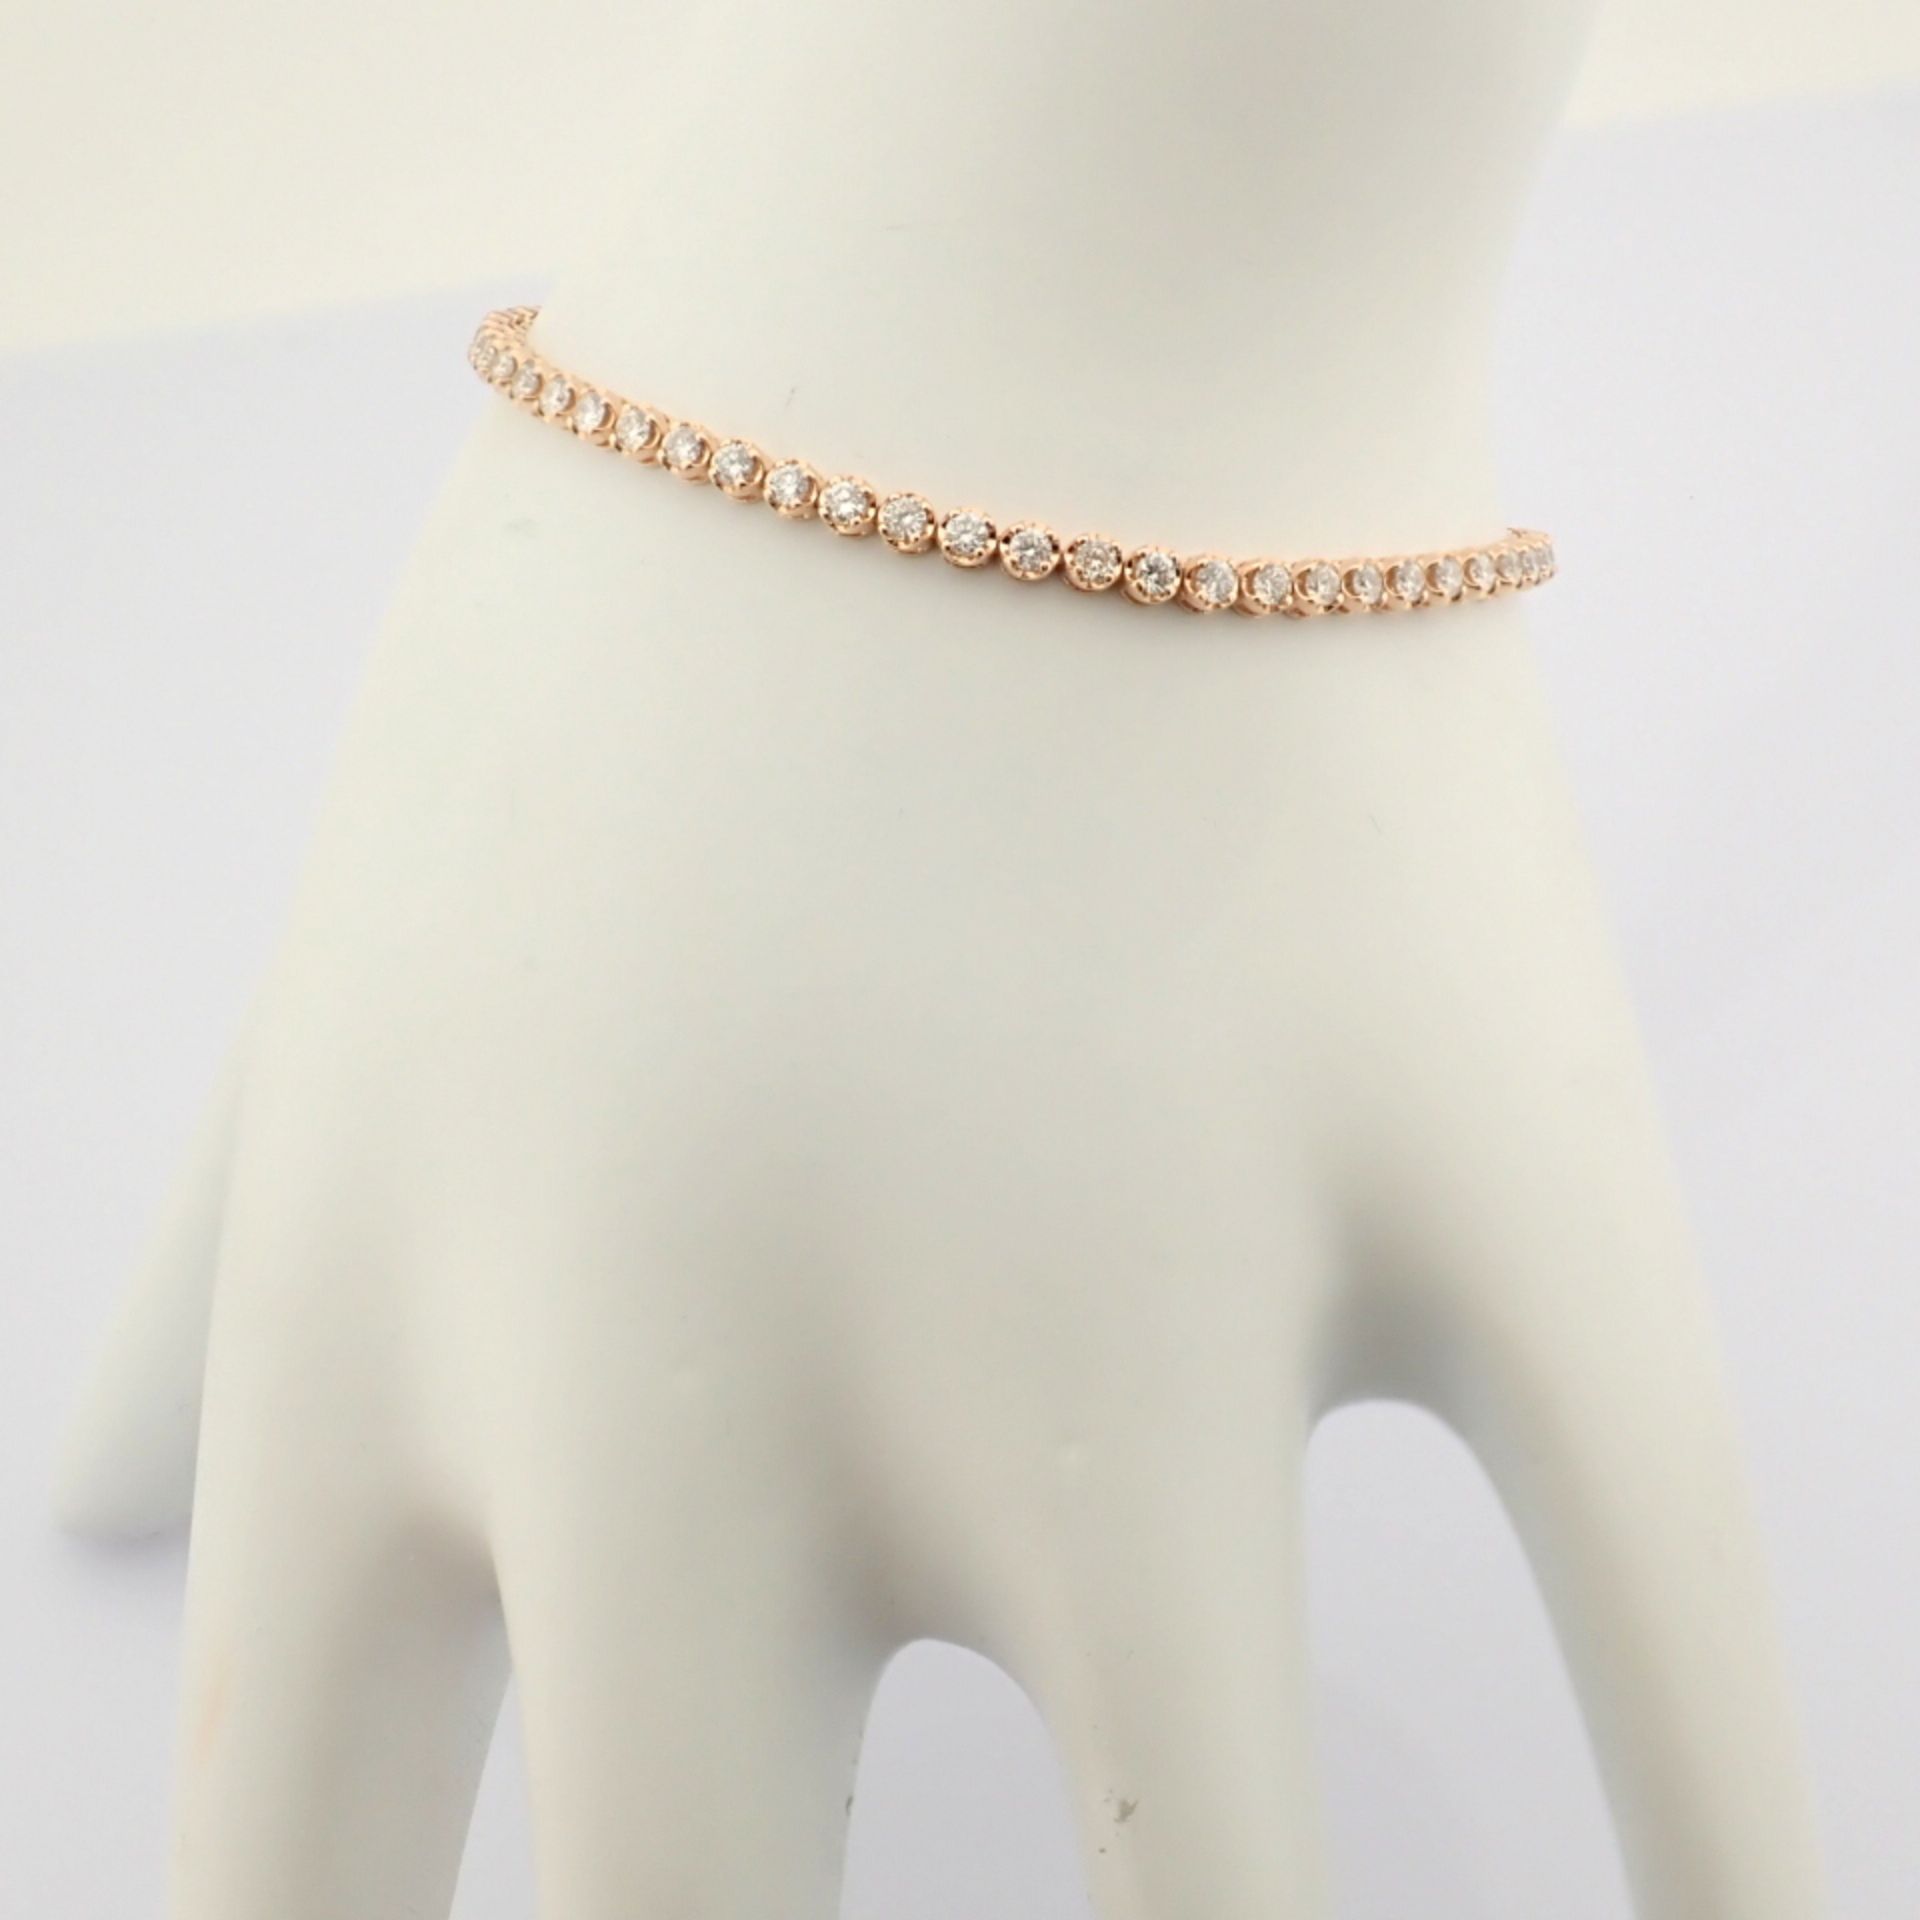 Certificated 14K Rose/Pink Gold Diamond Bracelet - Image 13 of 16